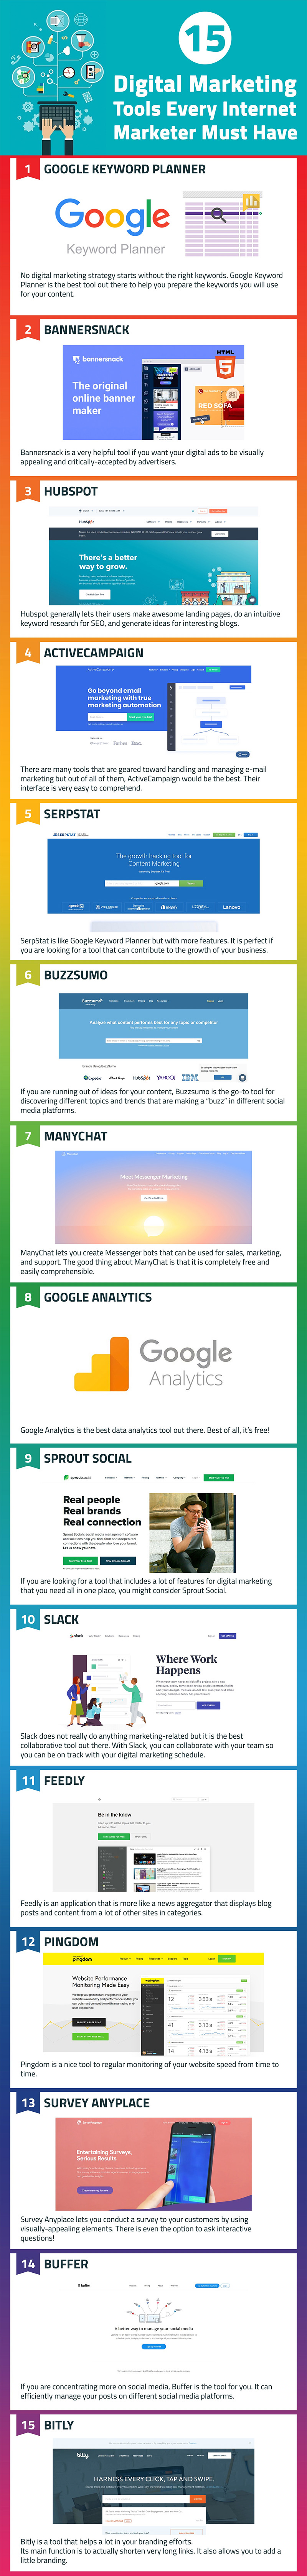 Digital Marketing Tools Infographic